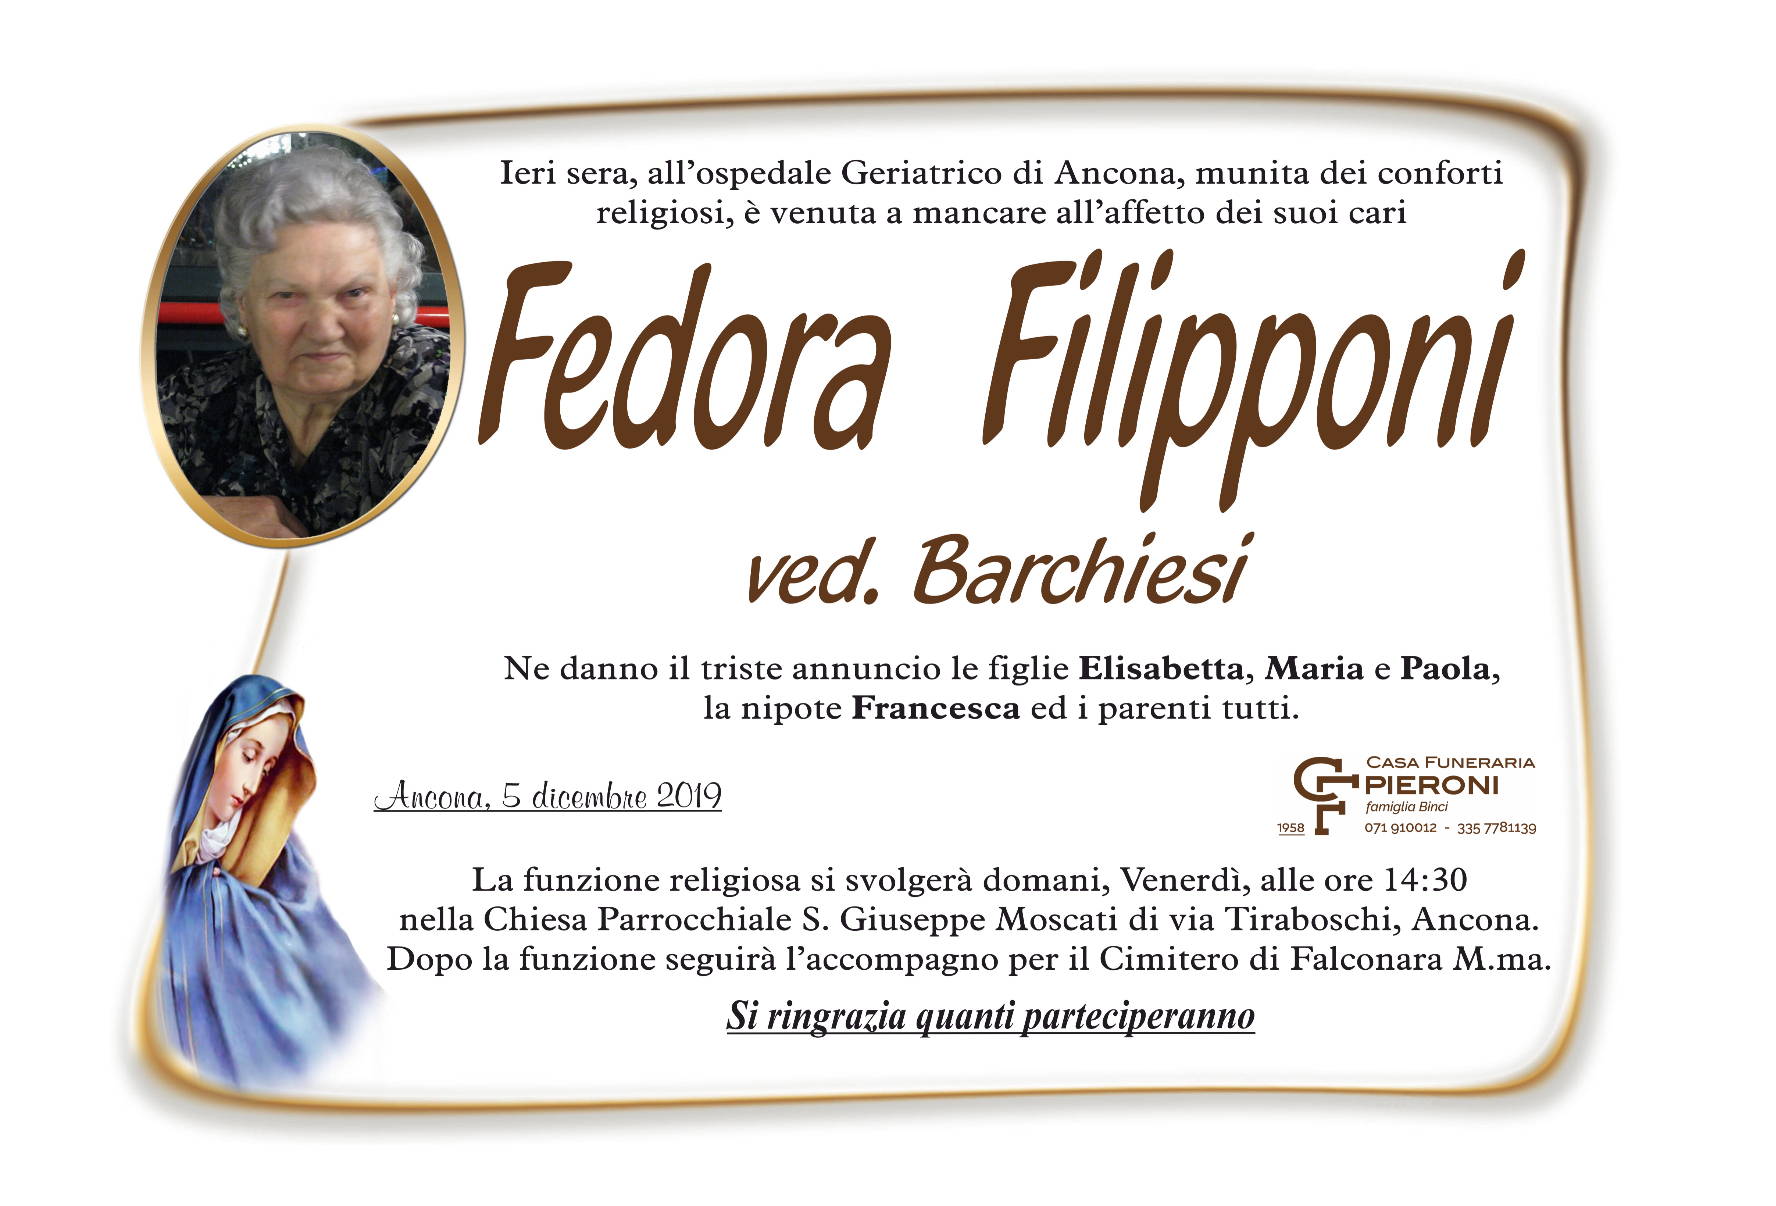 Fedora Filipponi